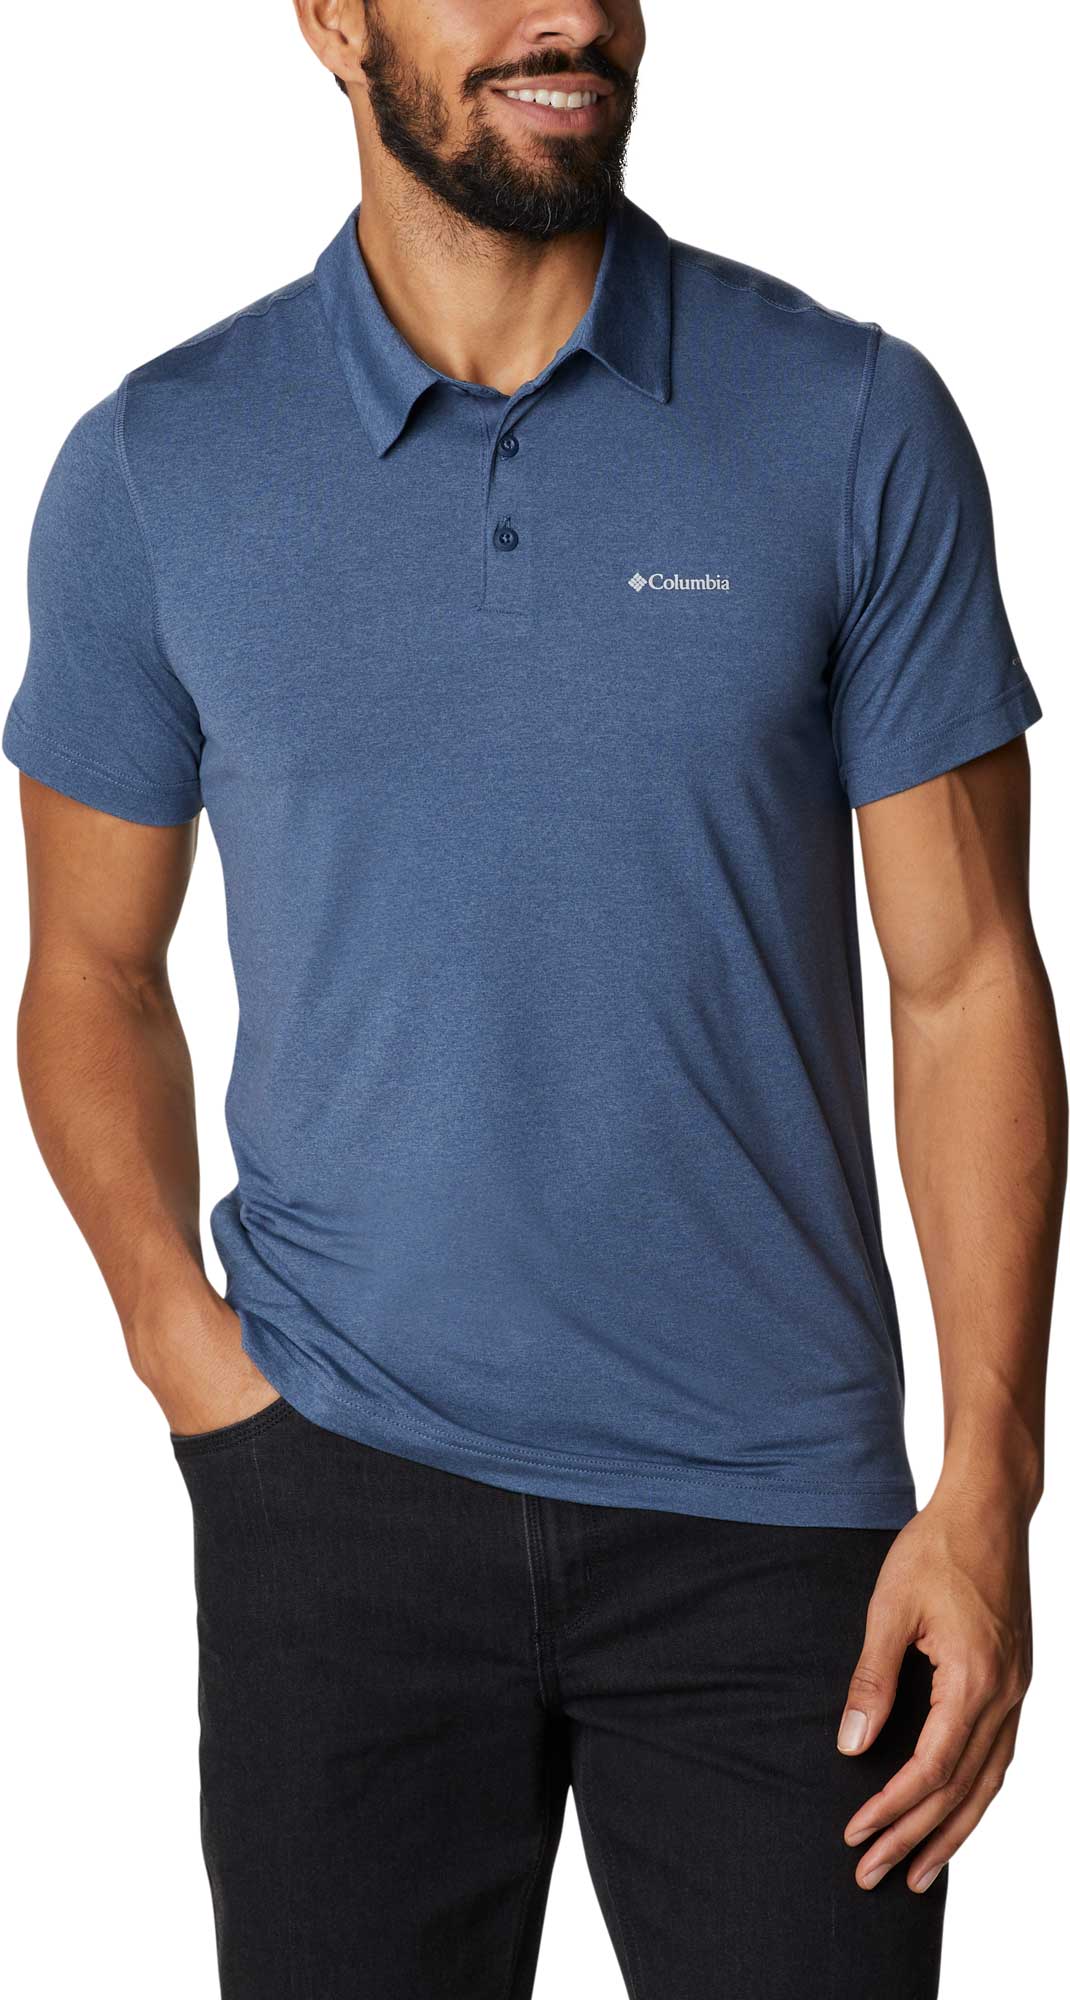 Men's functional polo shirt